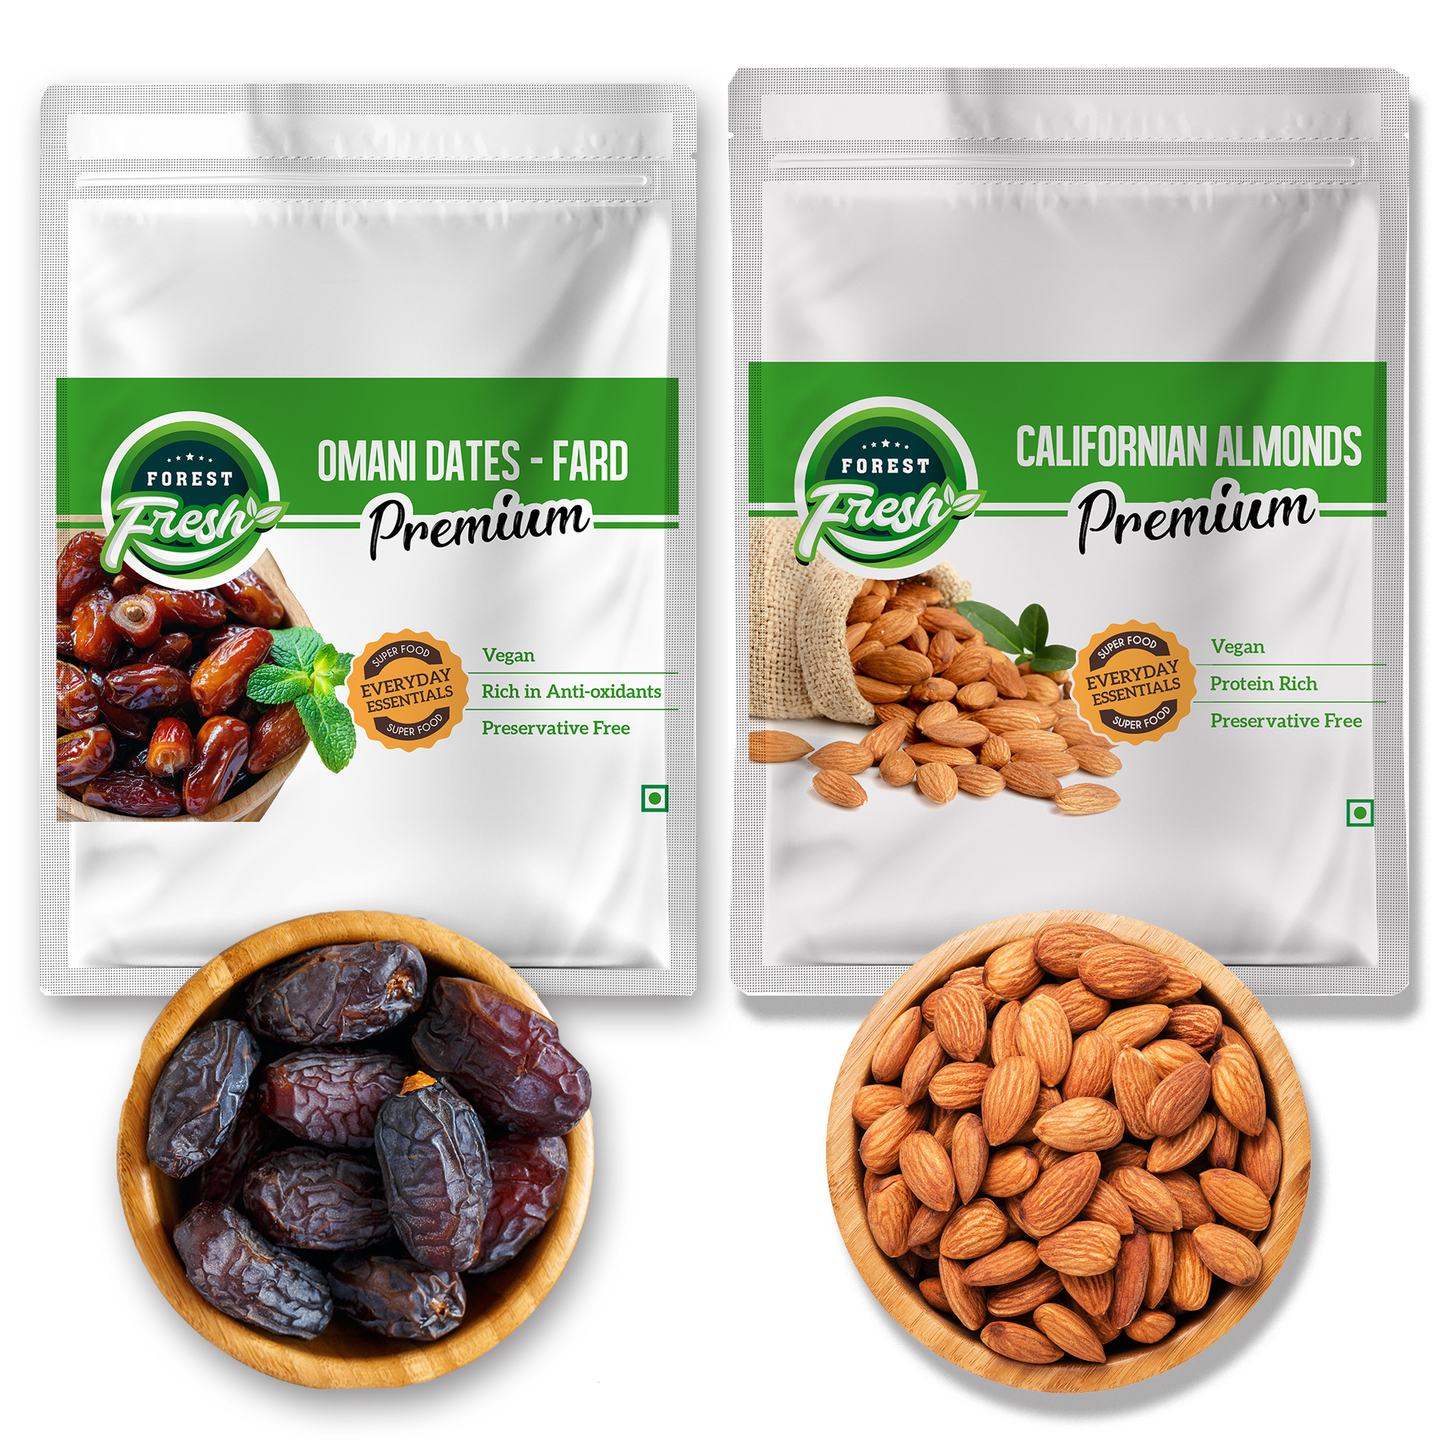 Forest Fresh Premium Almonds Dates Combo - 800gm - California Almonds 400gm and Omani Dates Fard 400gm